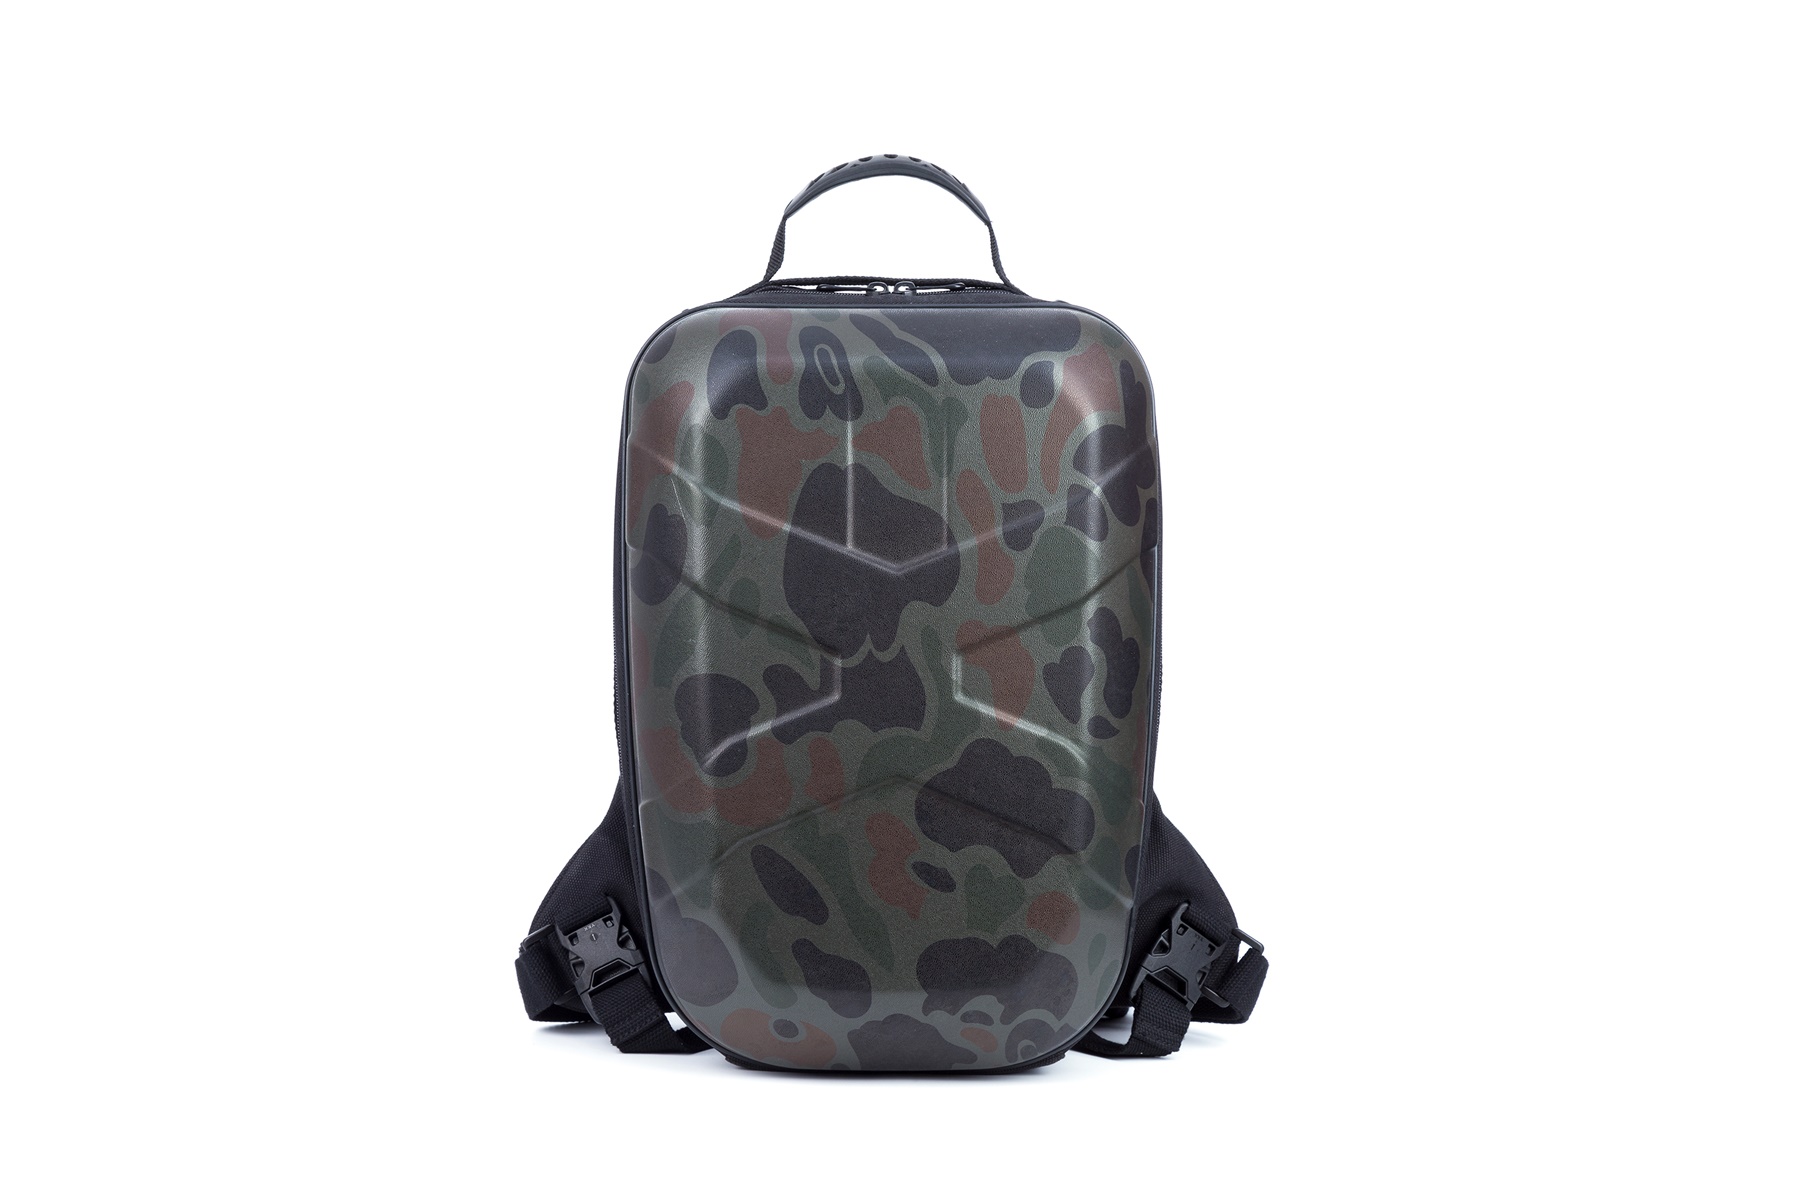 Military backpack hard shell with zipper closure